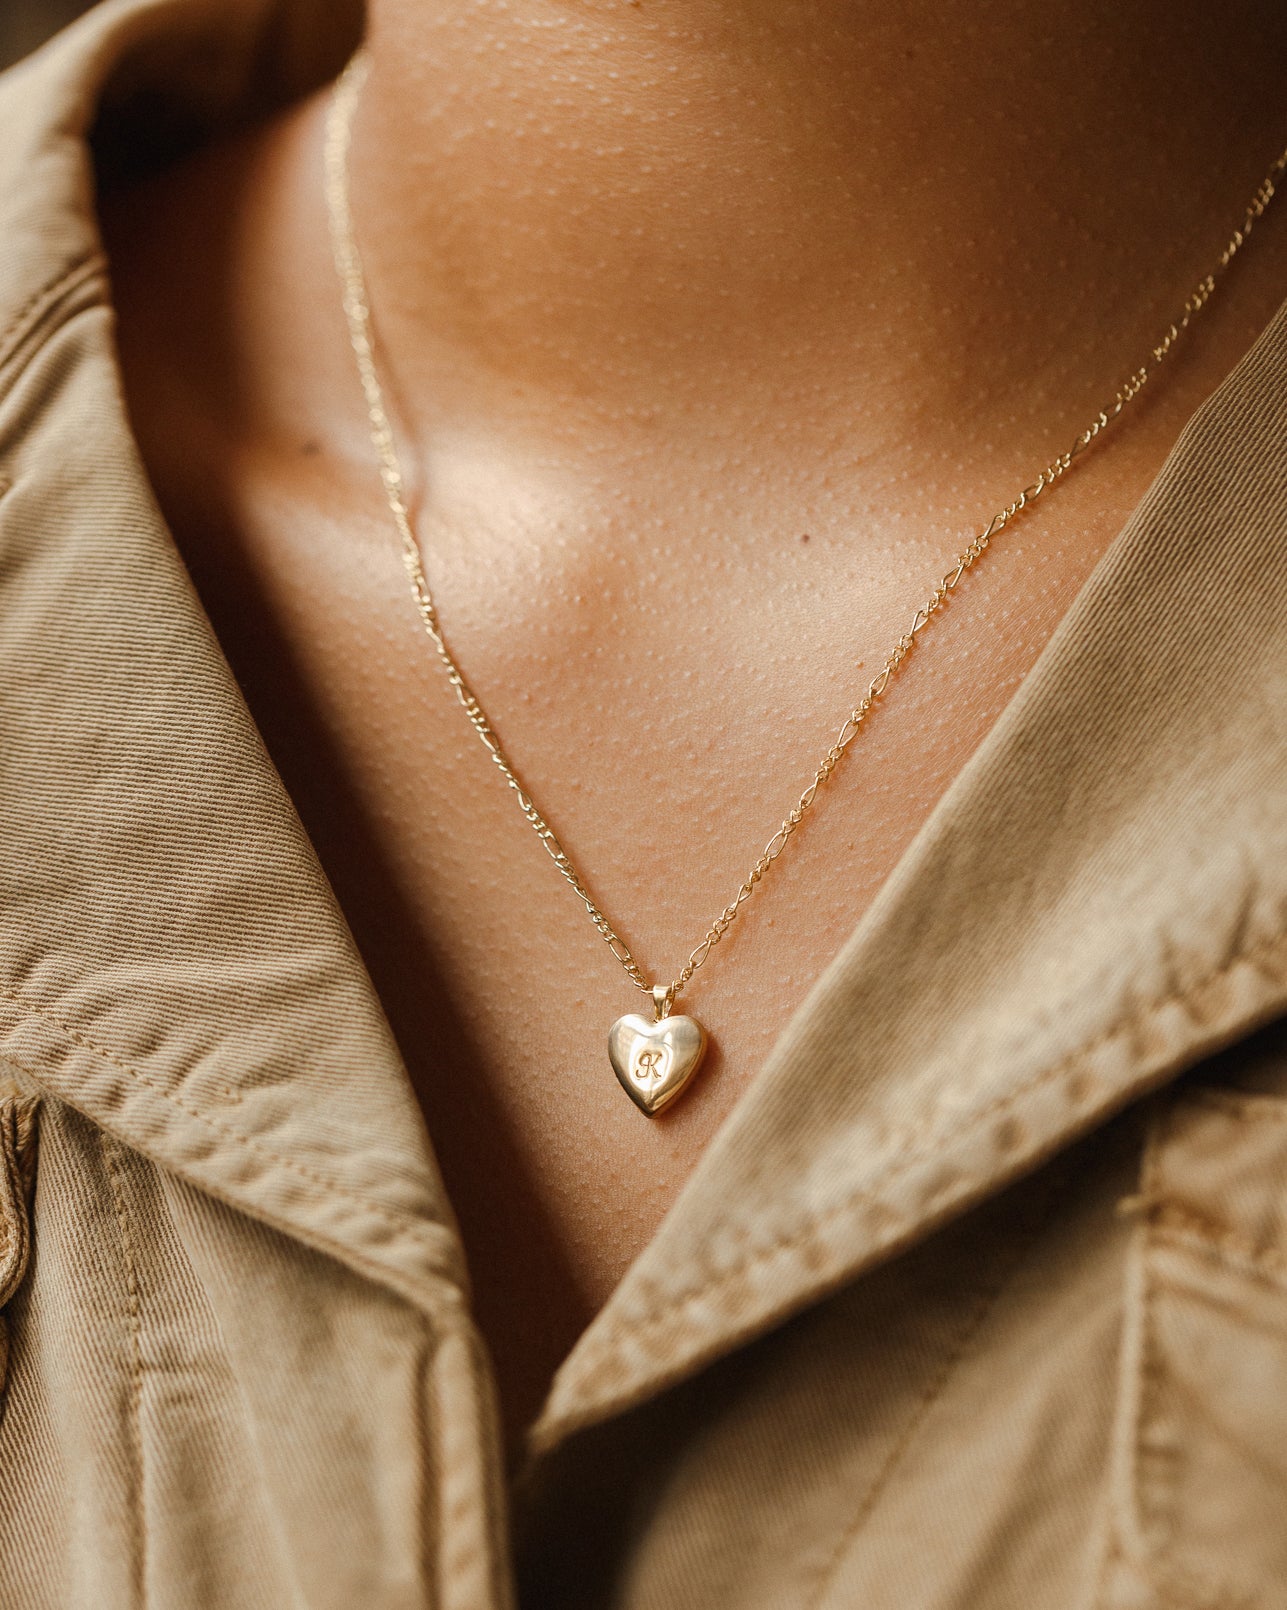 heart locket necklace